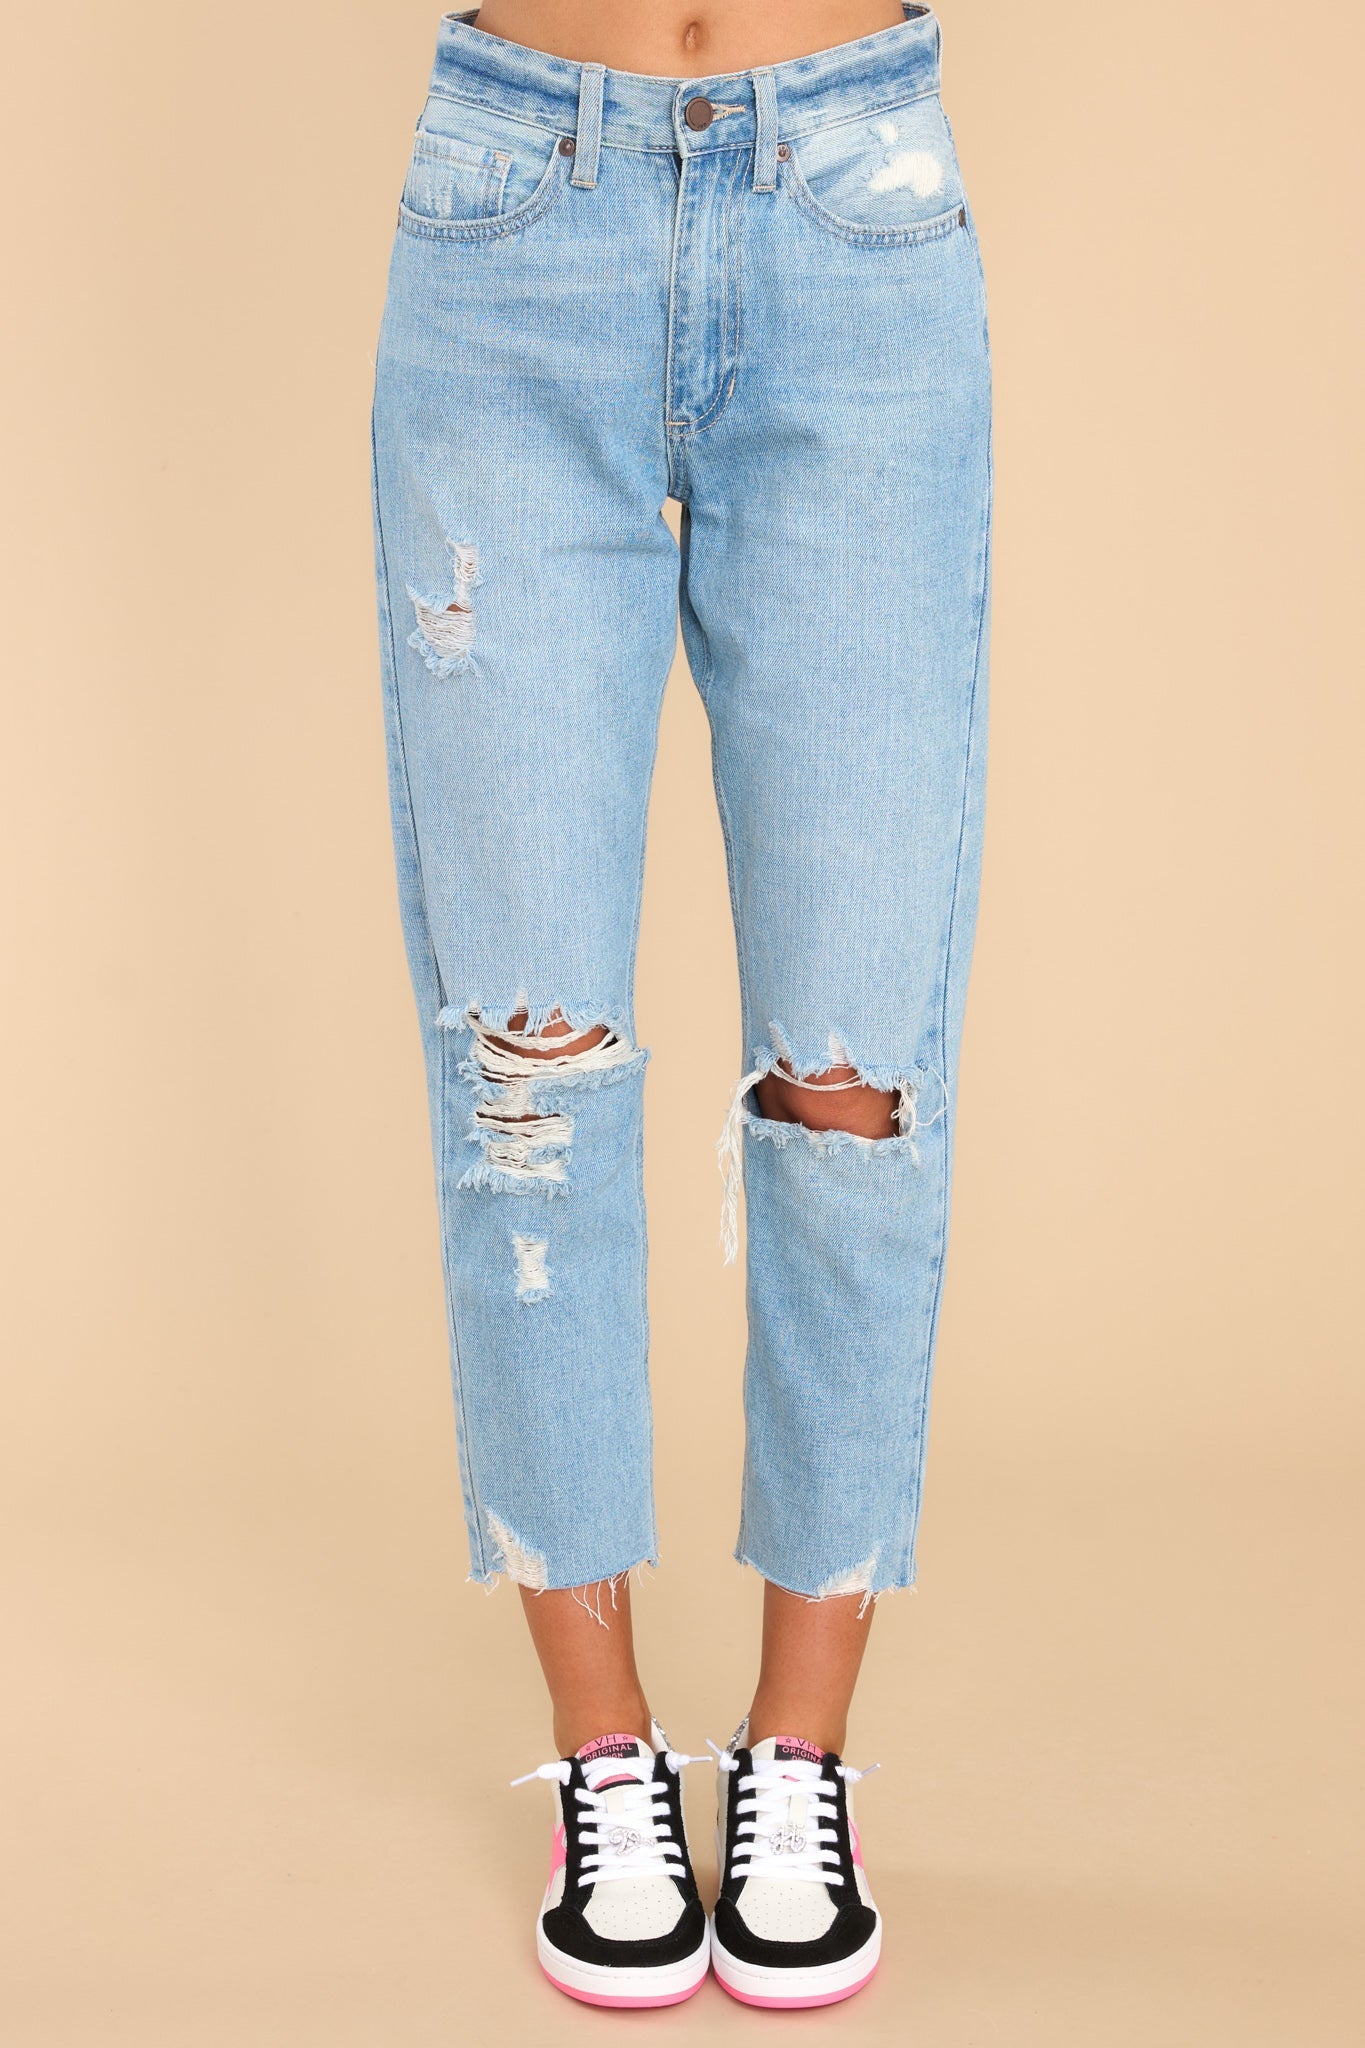 Cute Light Wash Jeans - Distressed Denim